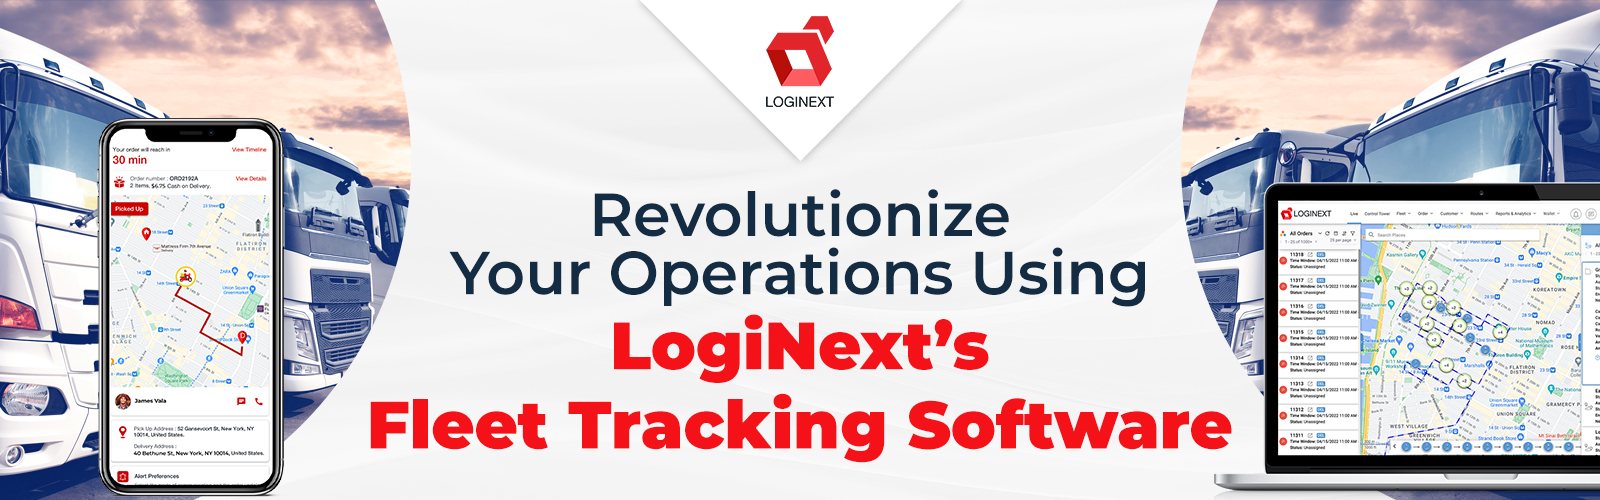 Revolutionize Operations Using LogiNext’s Fleet Tracking Software